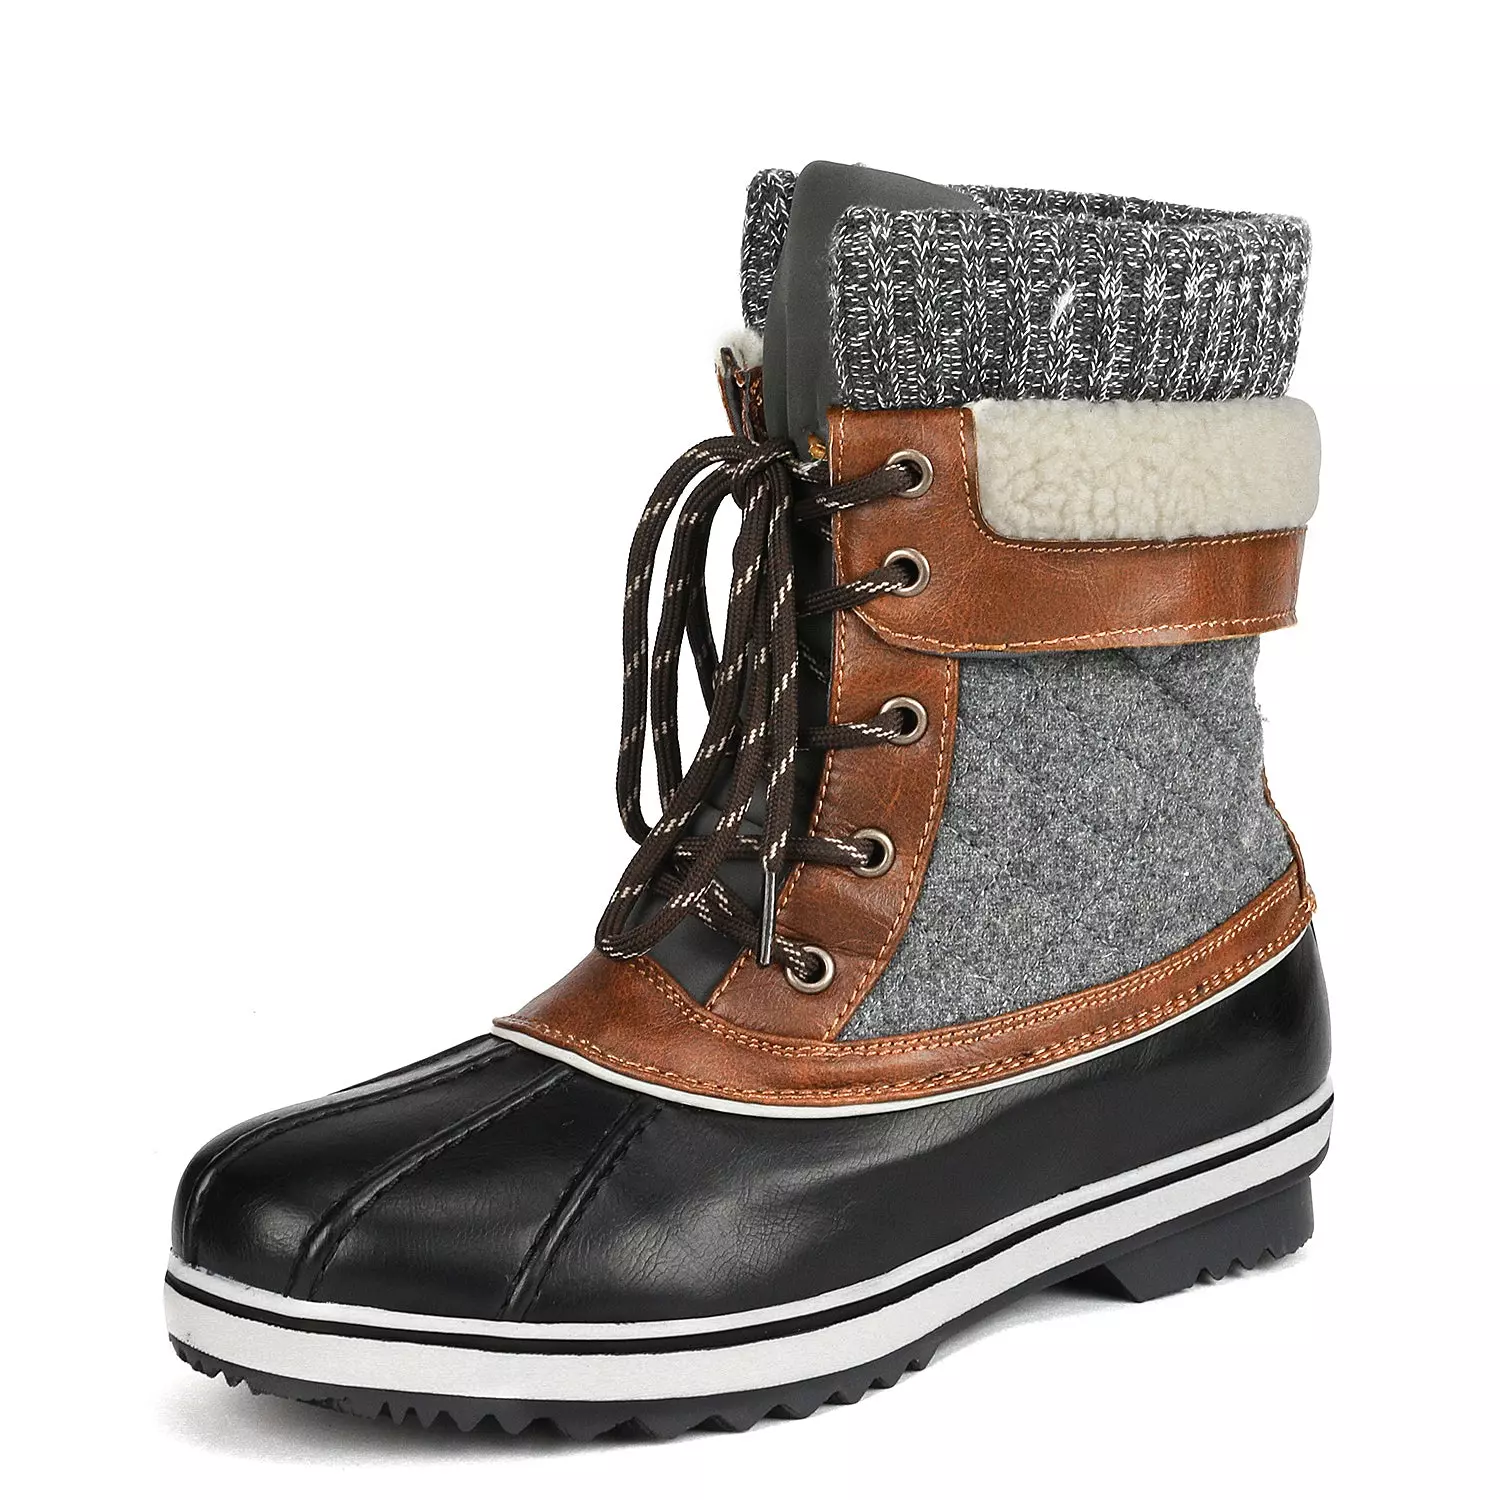 Dream Pairs Mid-Calf Winter Snow Boots